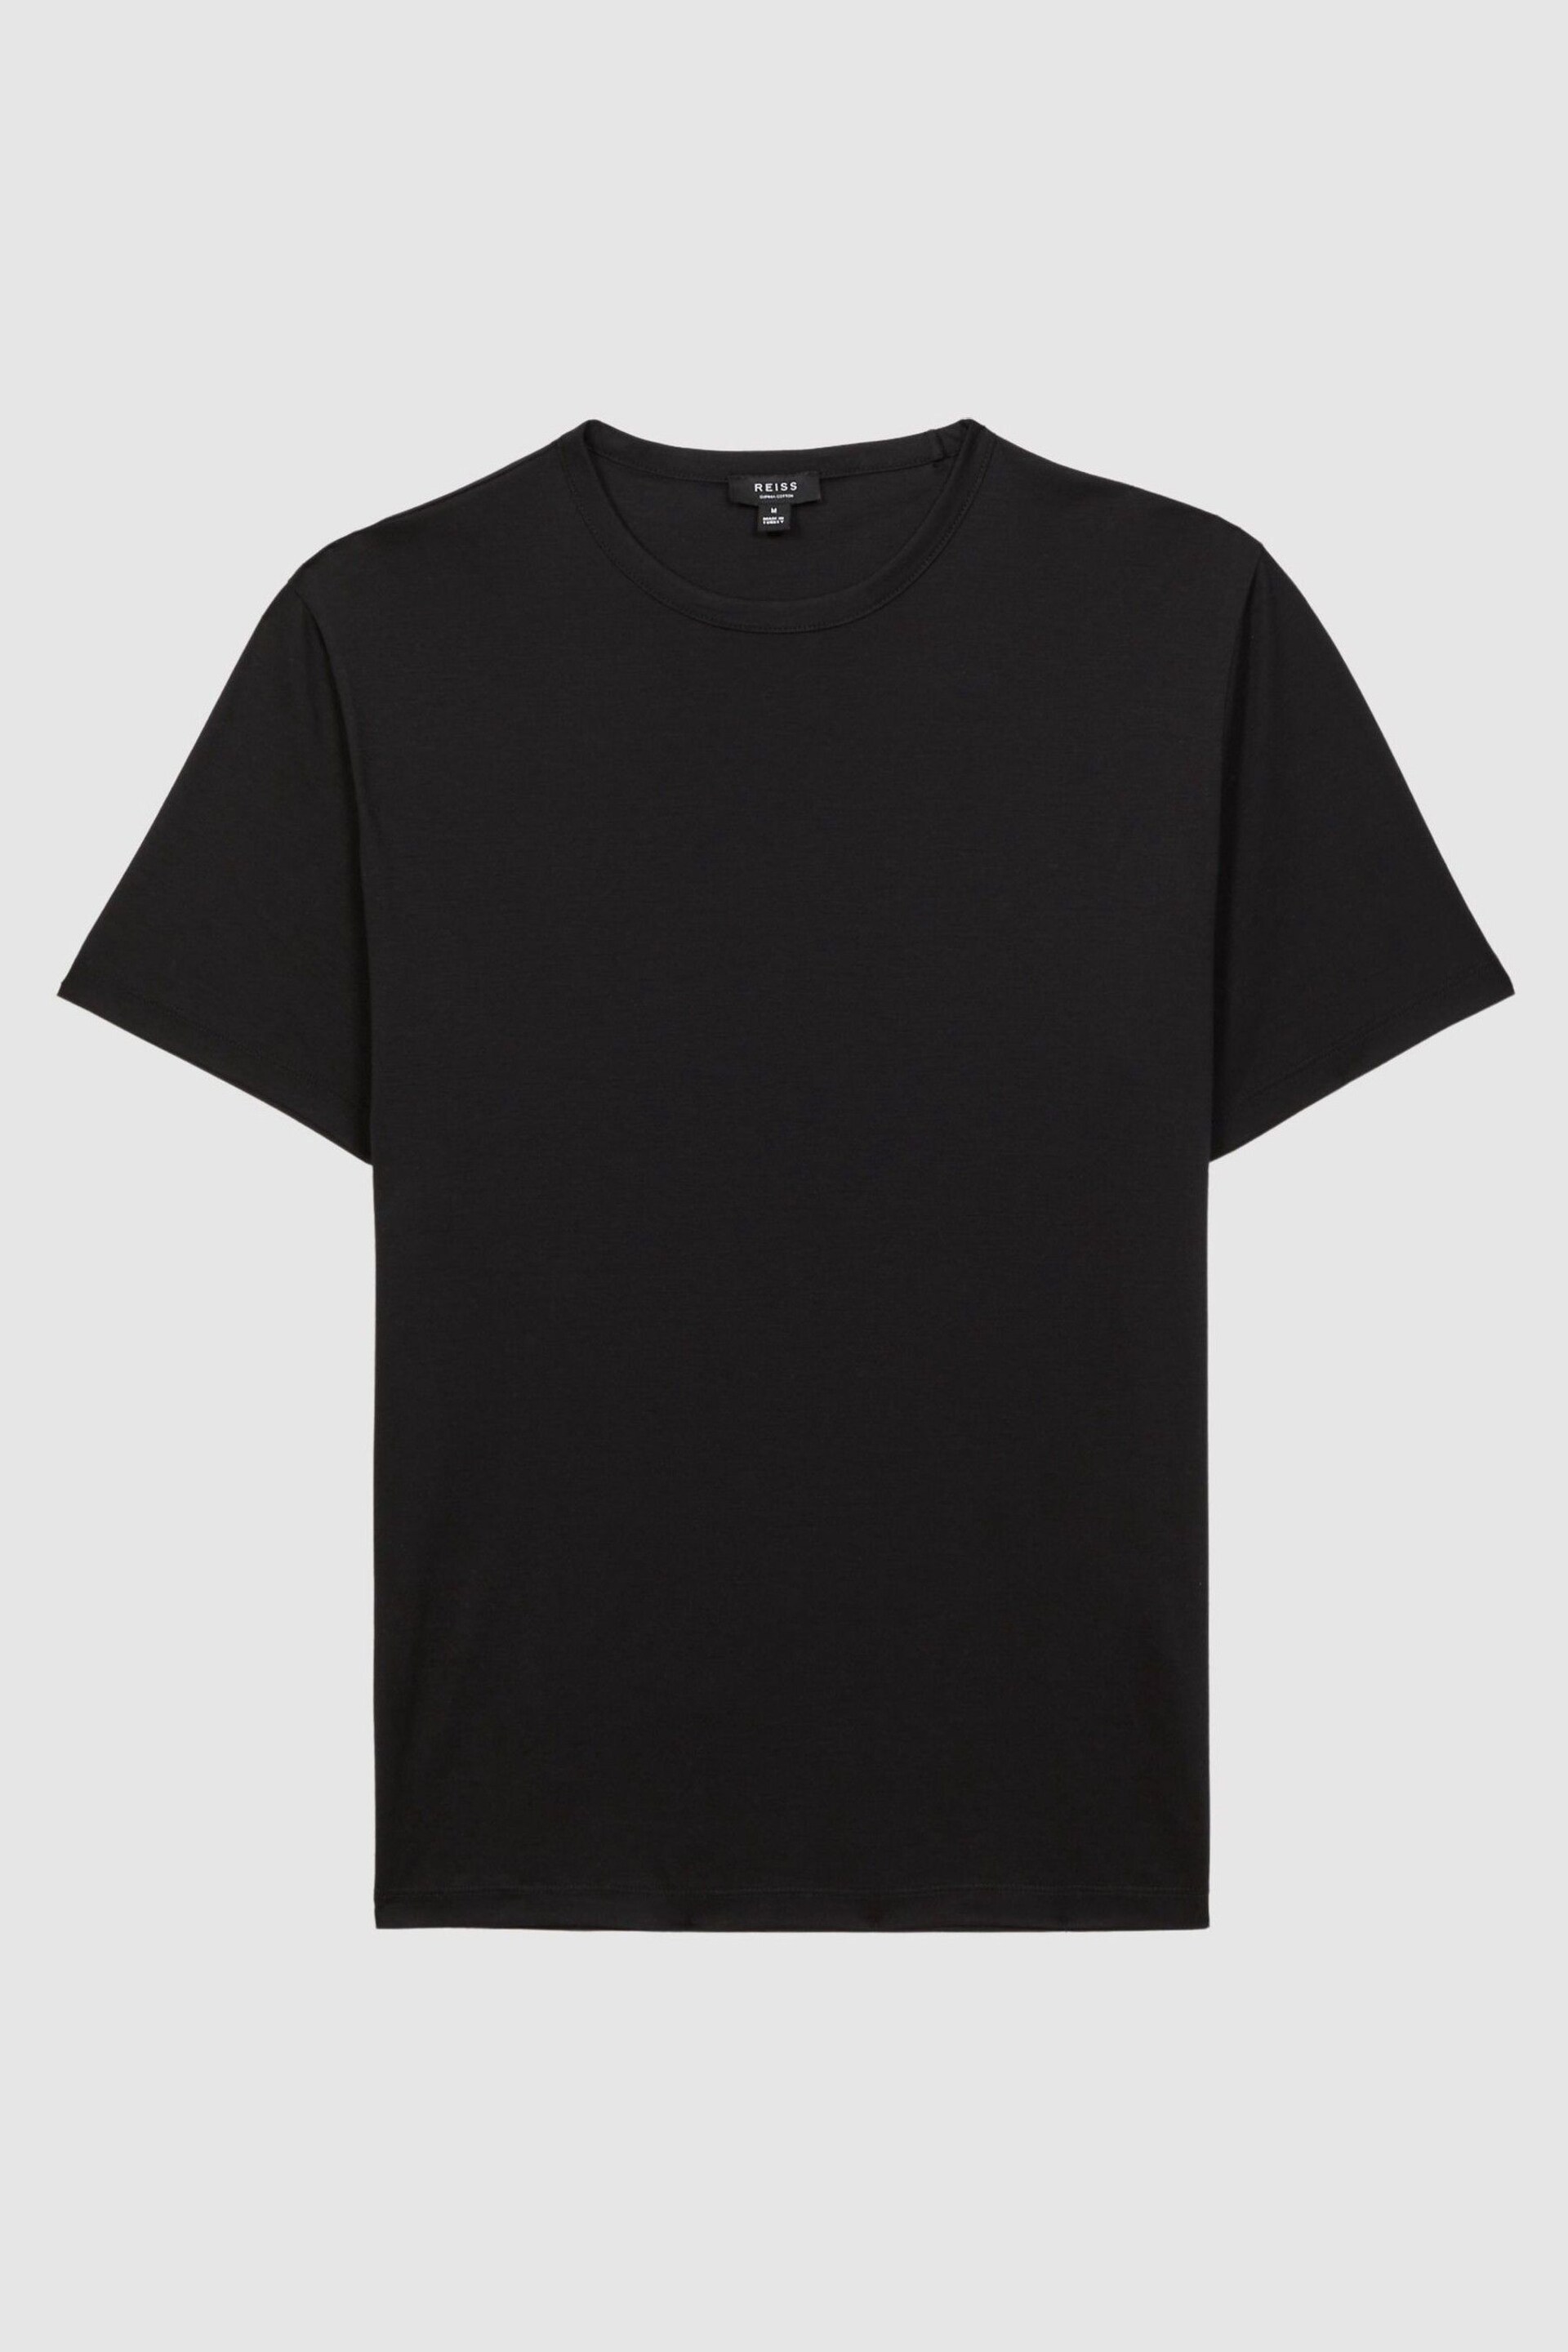 Reiss Black Capri Cotton Crew Neck T-Shirt - Image 2 of 5